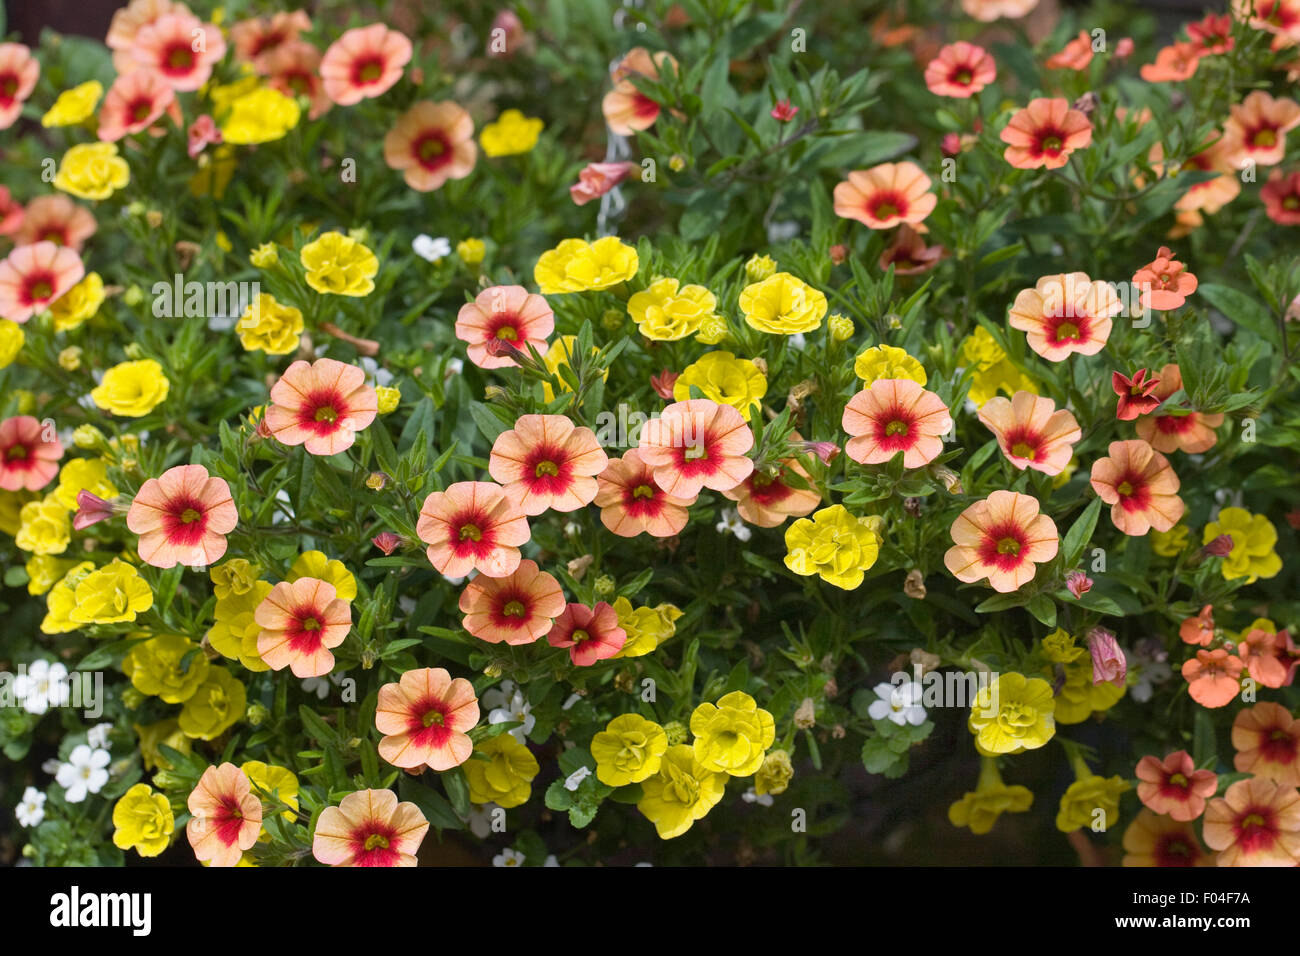 Calibrachoa. Million bells flowers in a hanging basket. Stock Photo